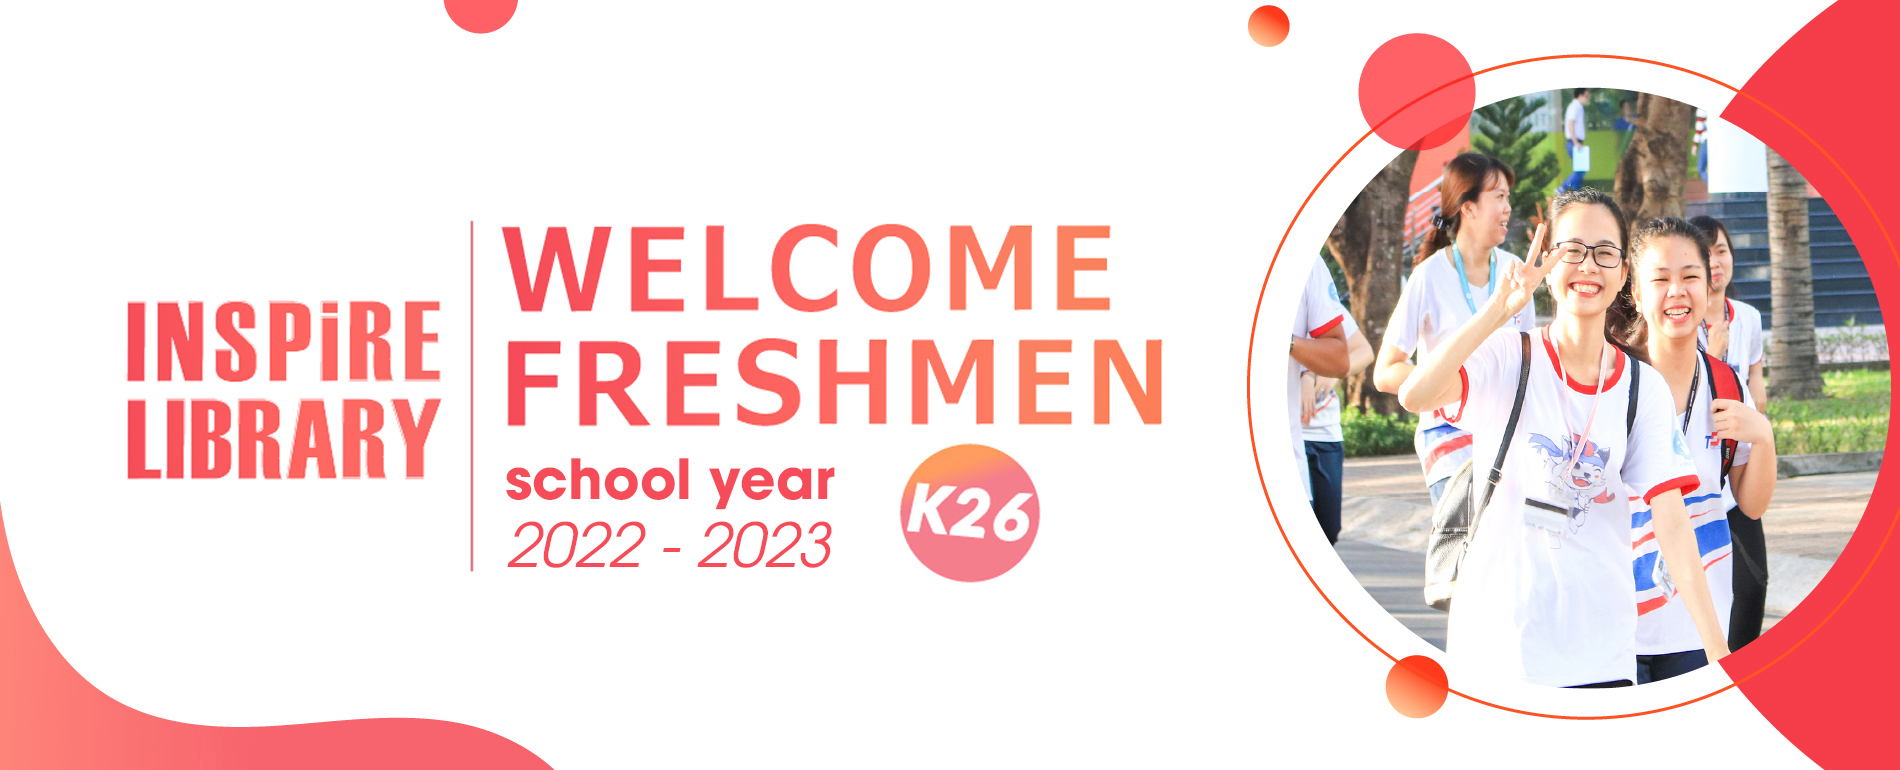 Welcome Freshmen 2022 K26